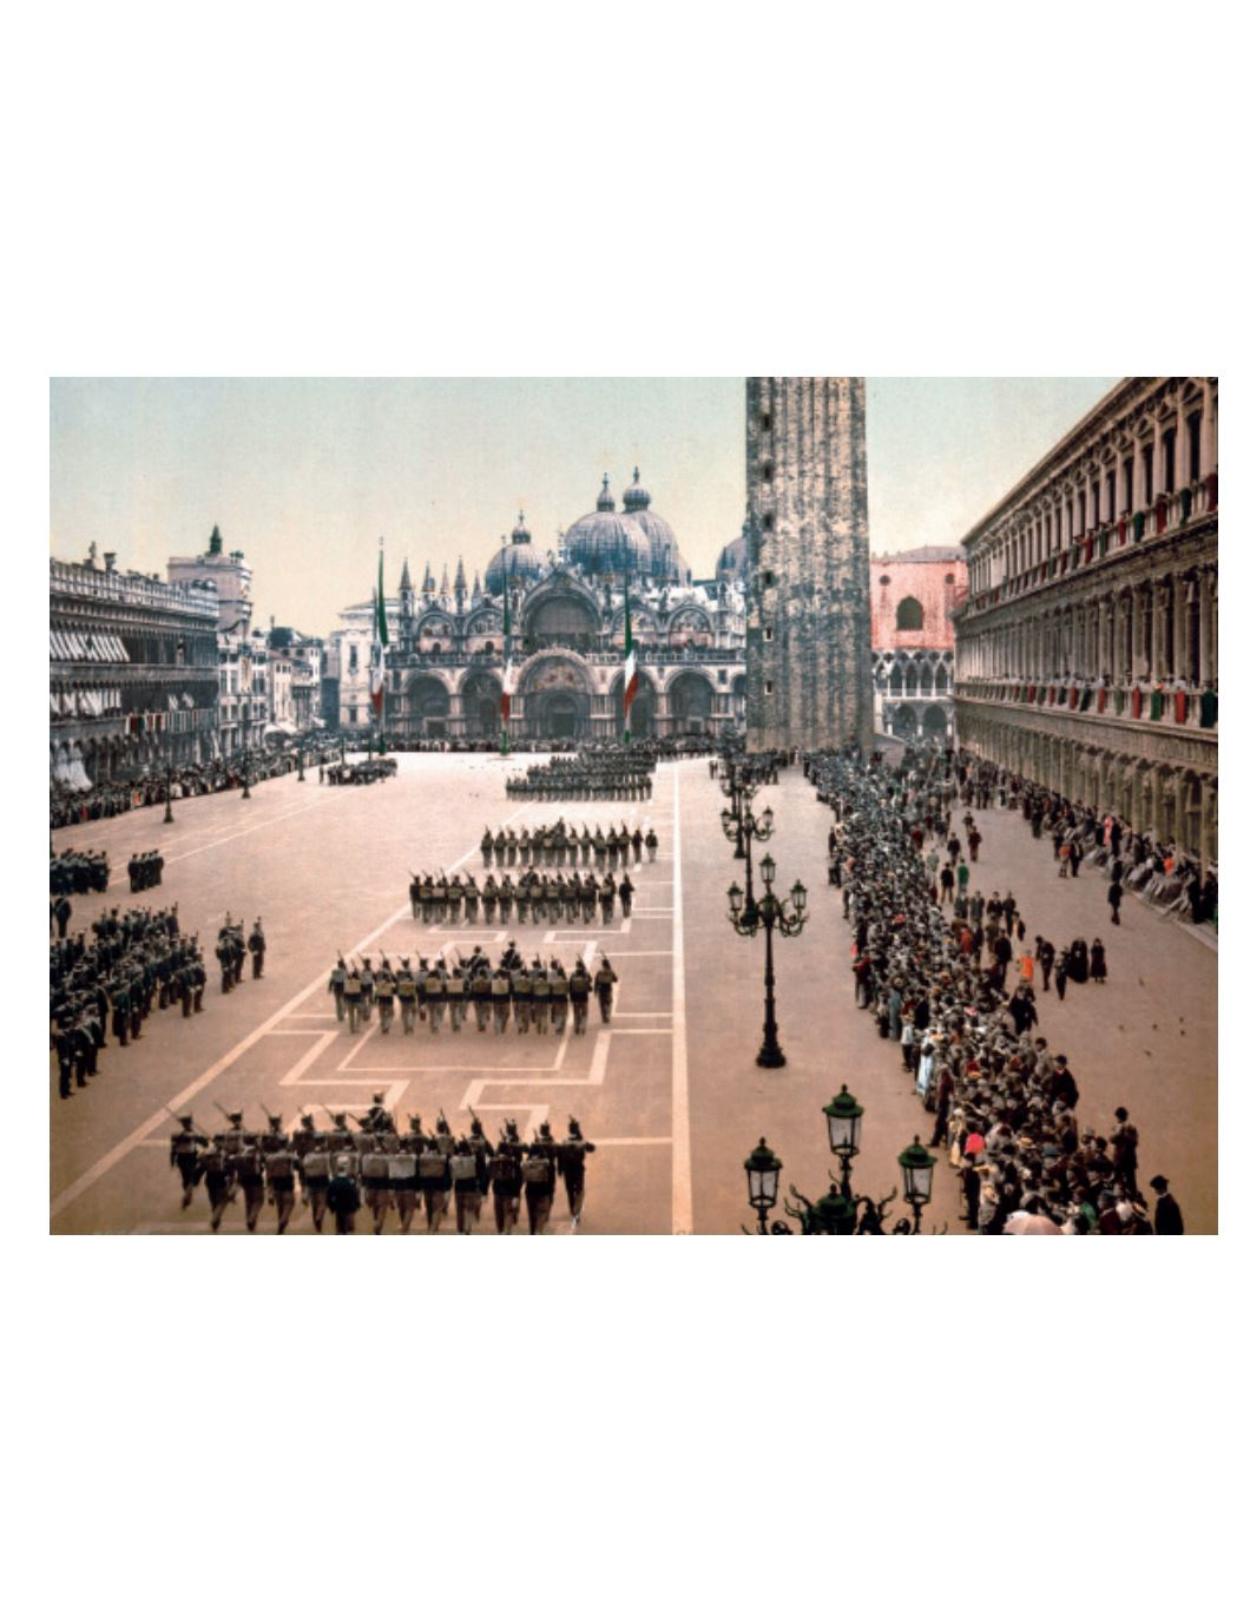 Album de arta- 1900 Lumea in fotografii de epoca